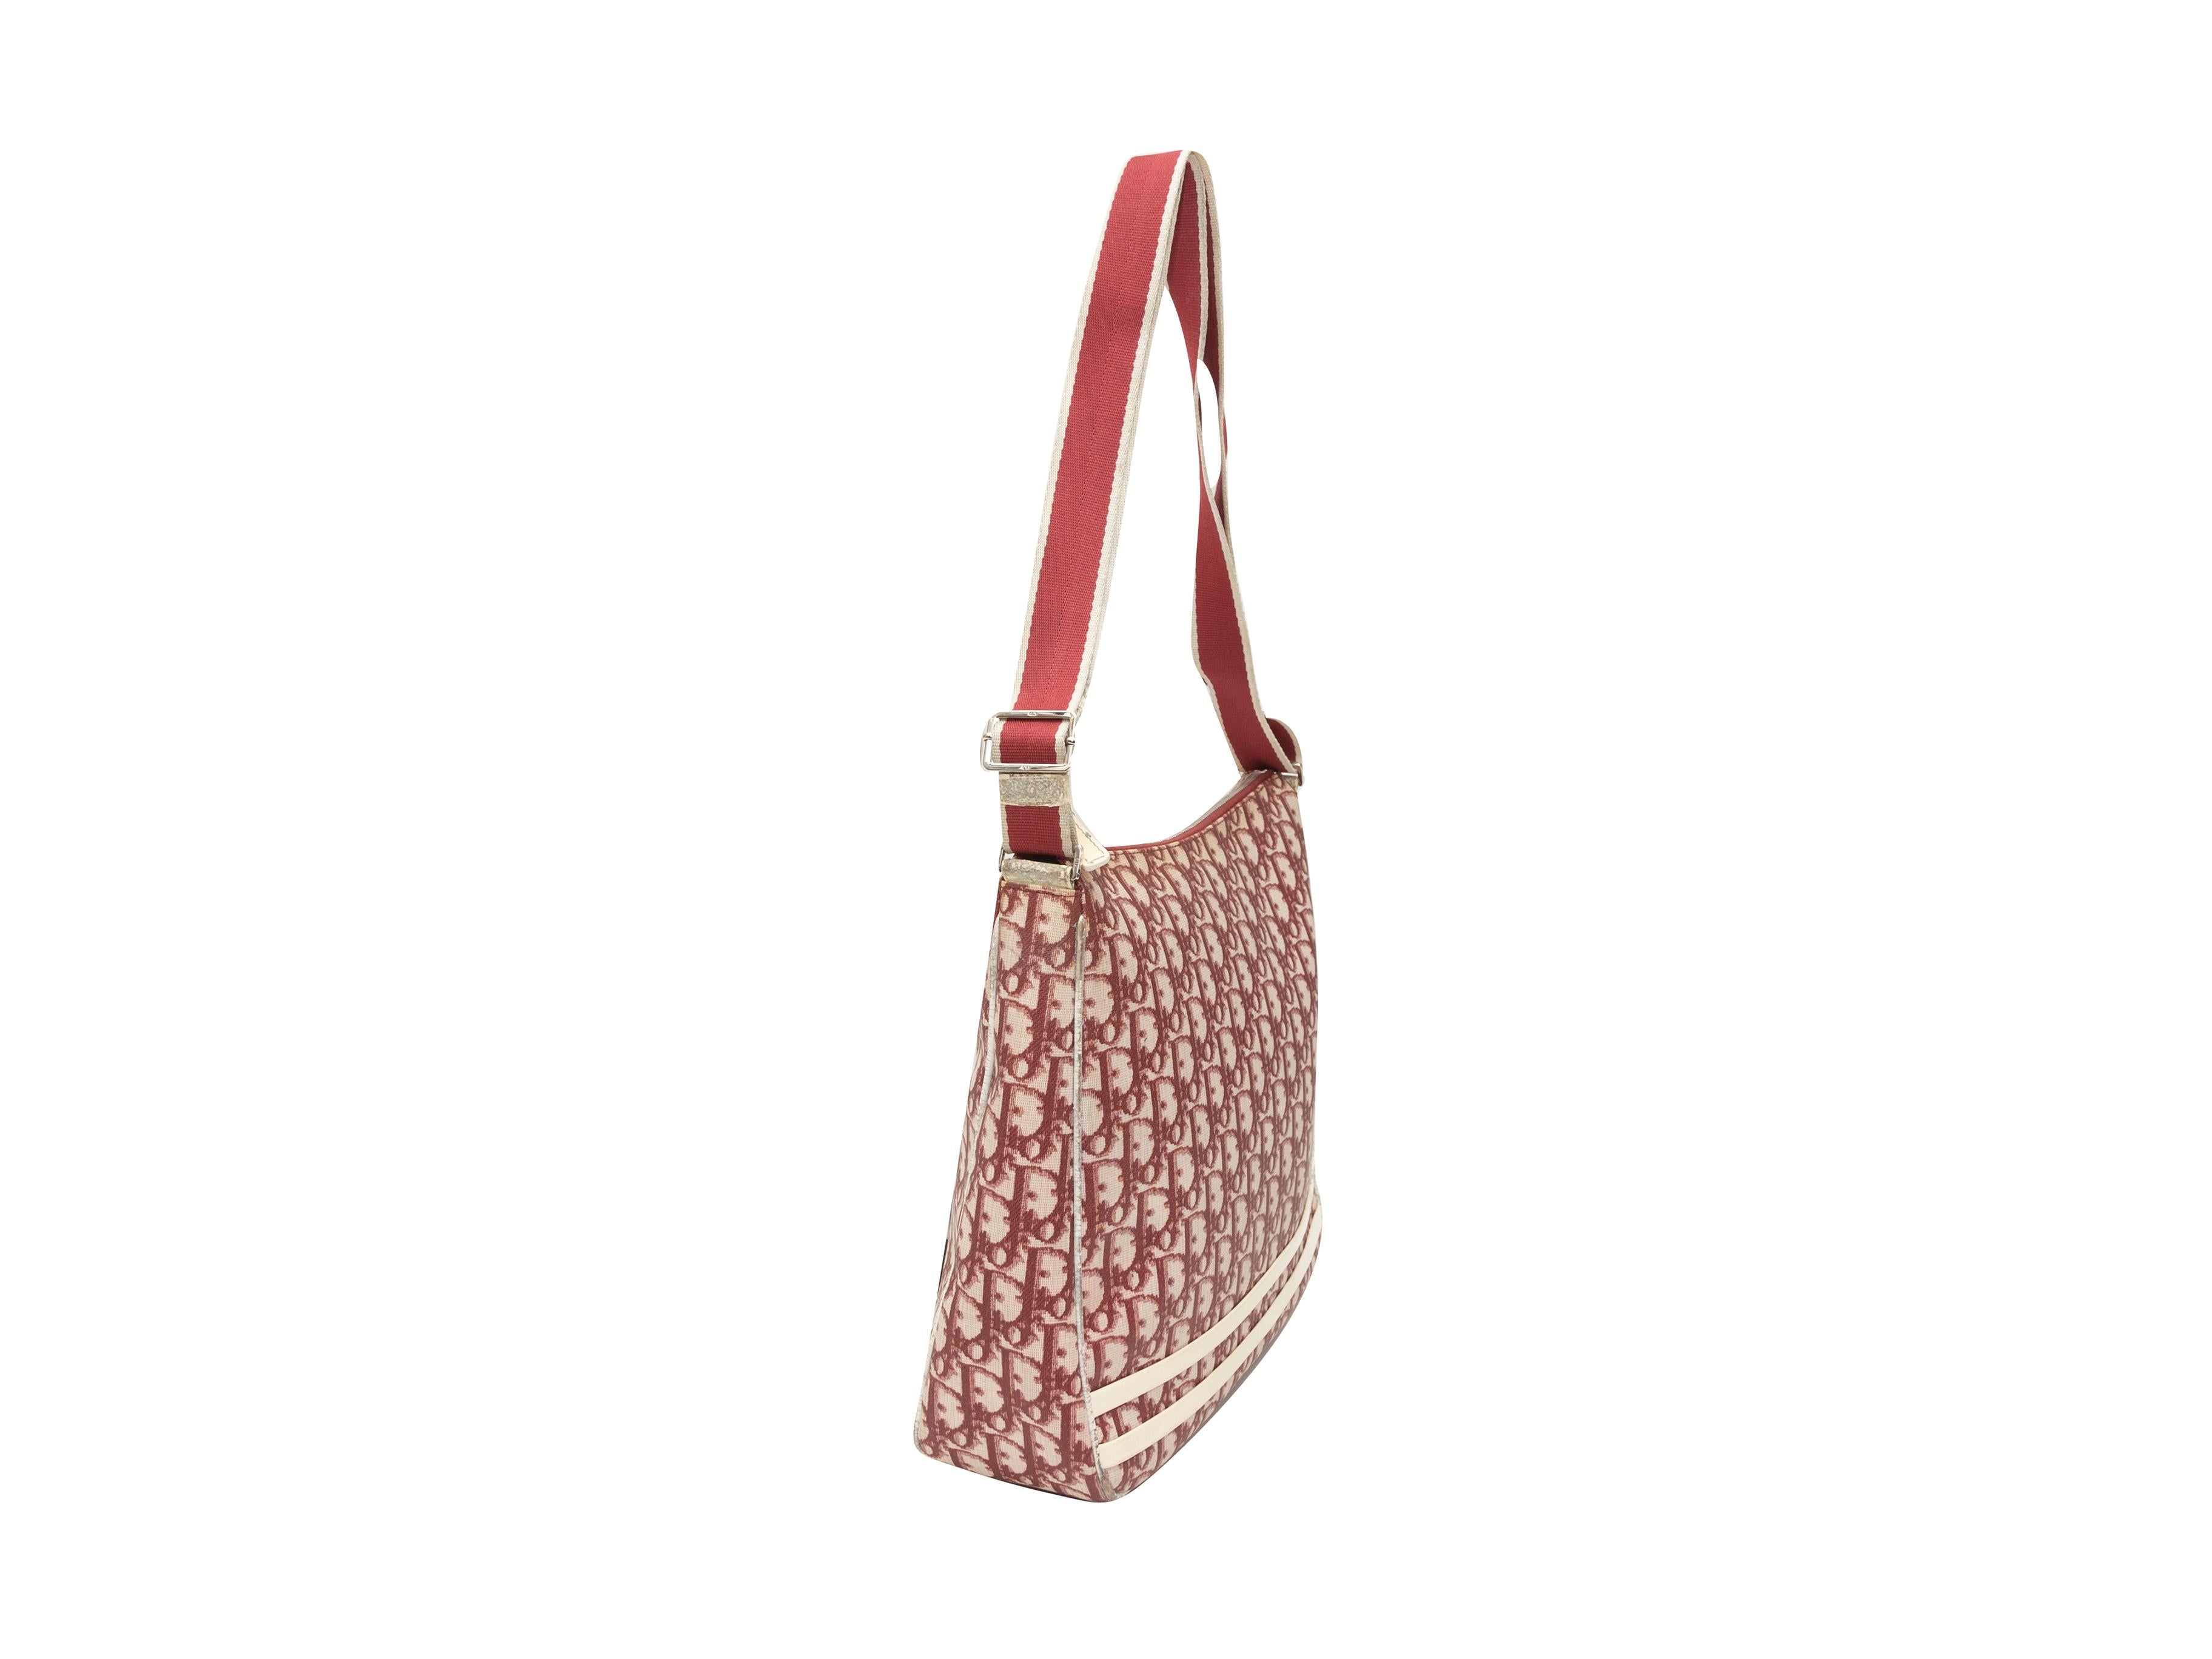 Product details: Vintage red and white Oblique Trotter Messenger Bag by Christian Dior. Circa 2004. Adjustable strap. 12